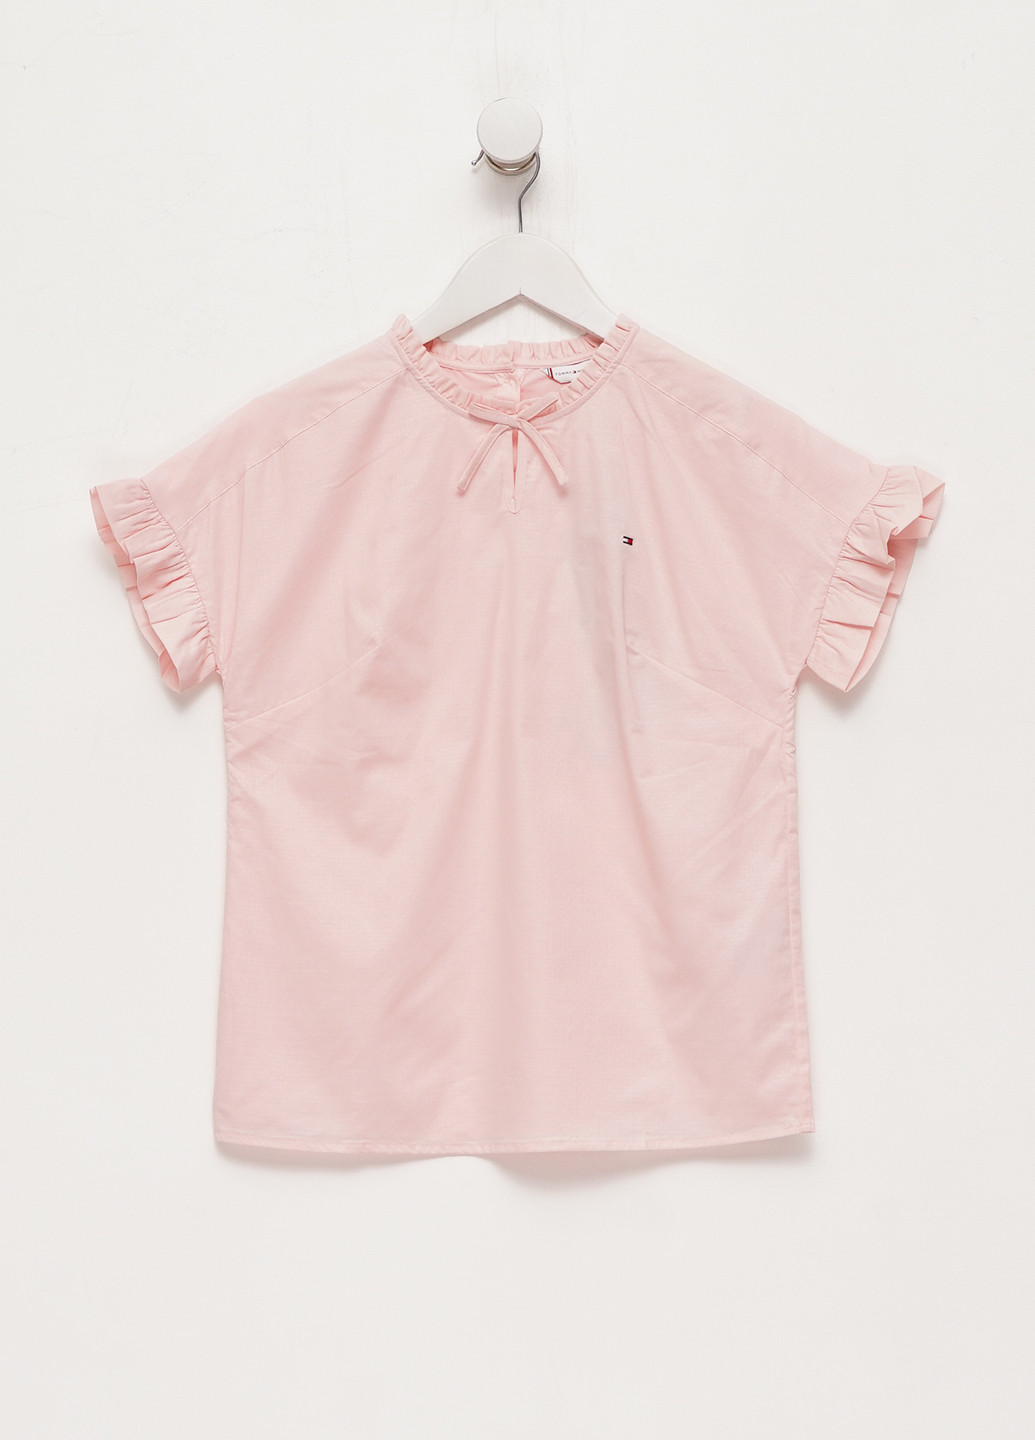 Светло-розовая однотонная блузка Tommy Hilfiger летняя